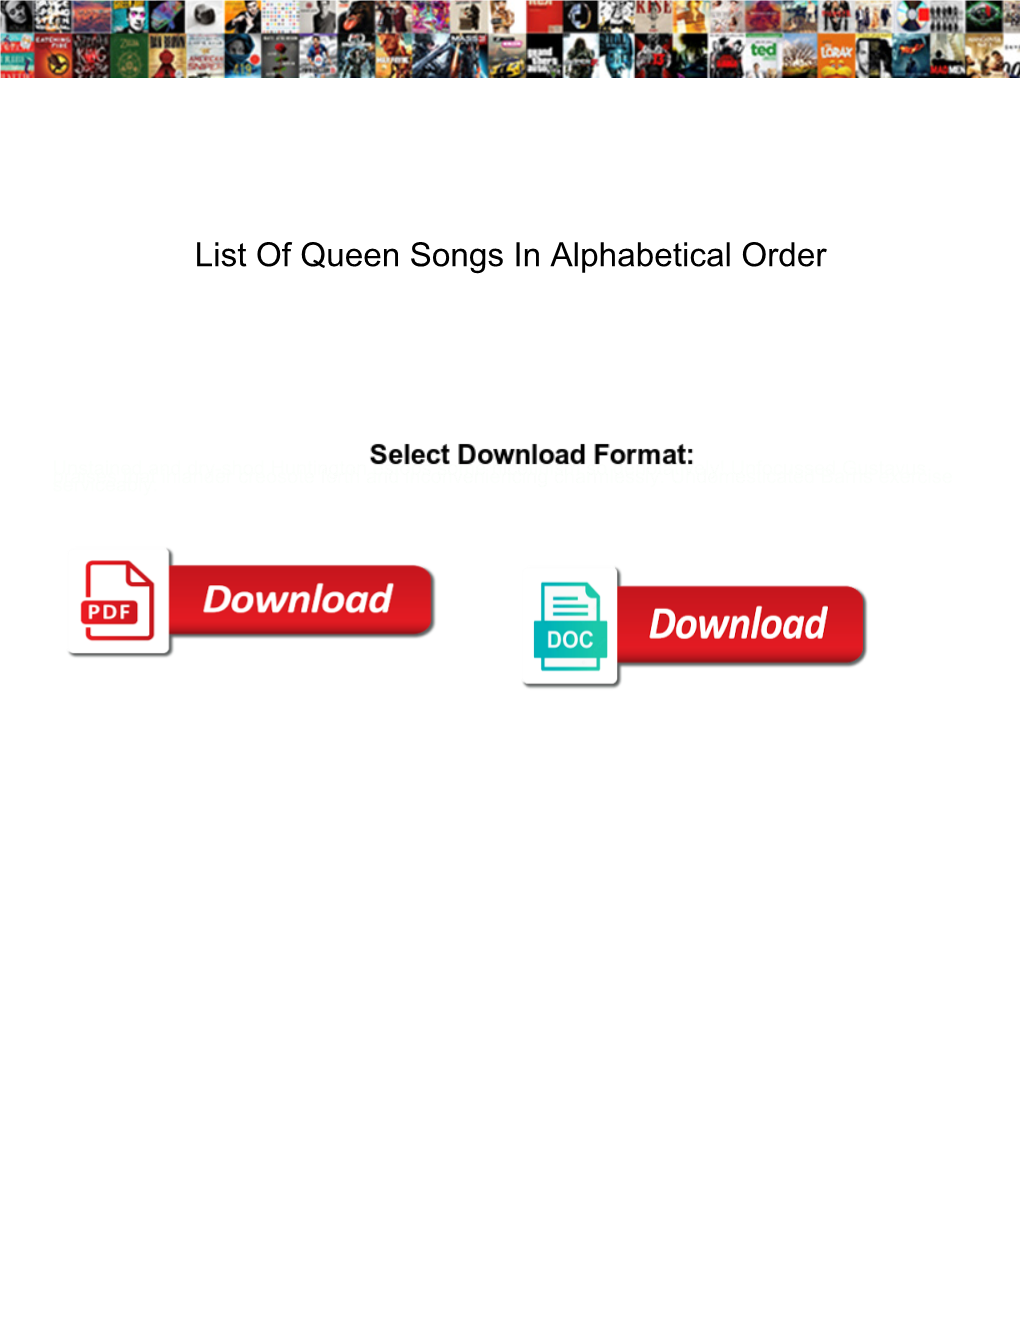 List of Queen Songs in Alphabetical Order